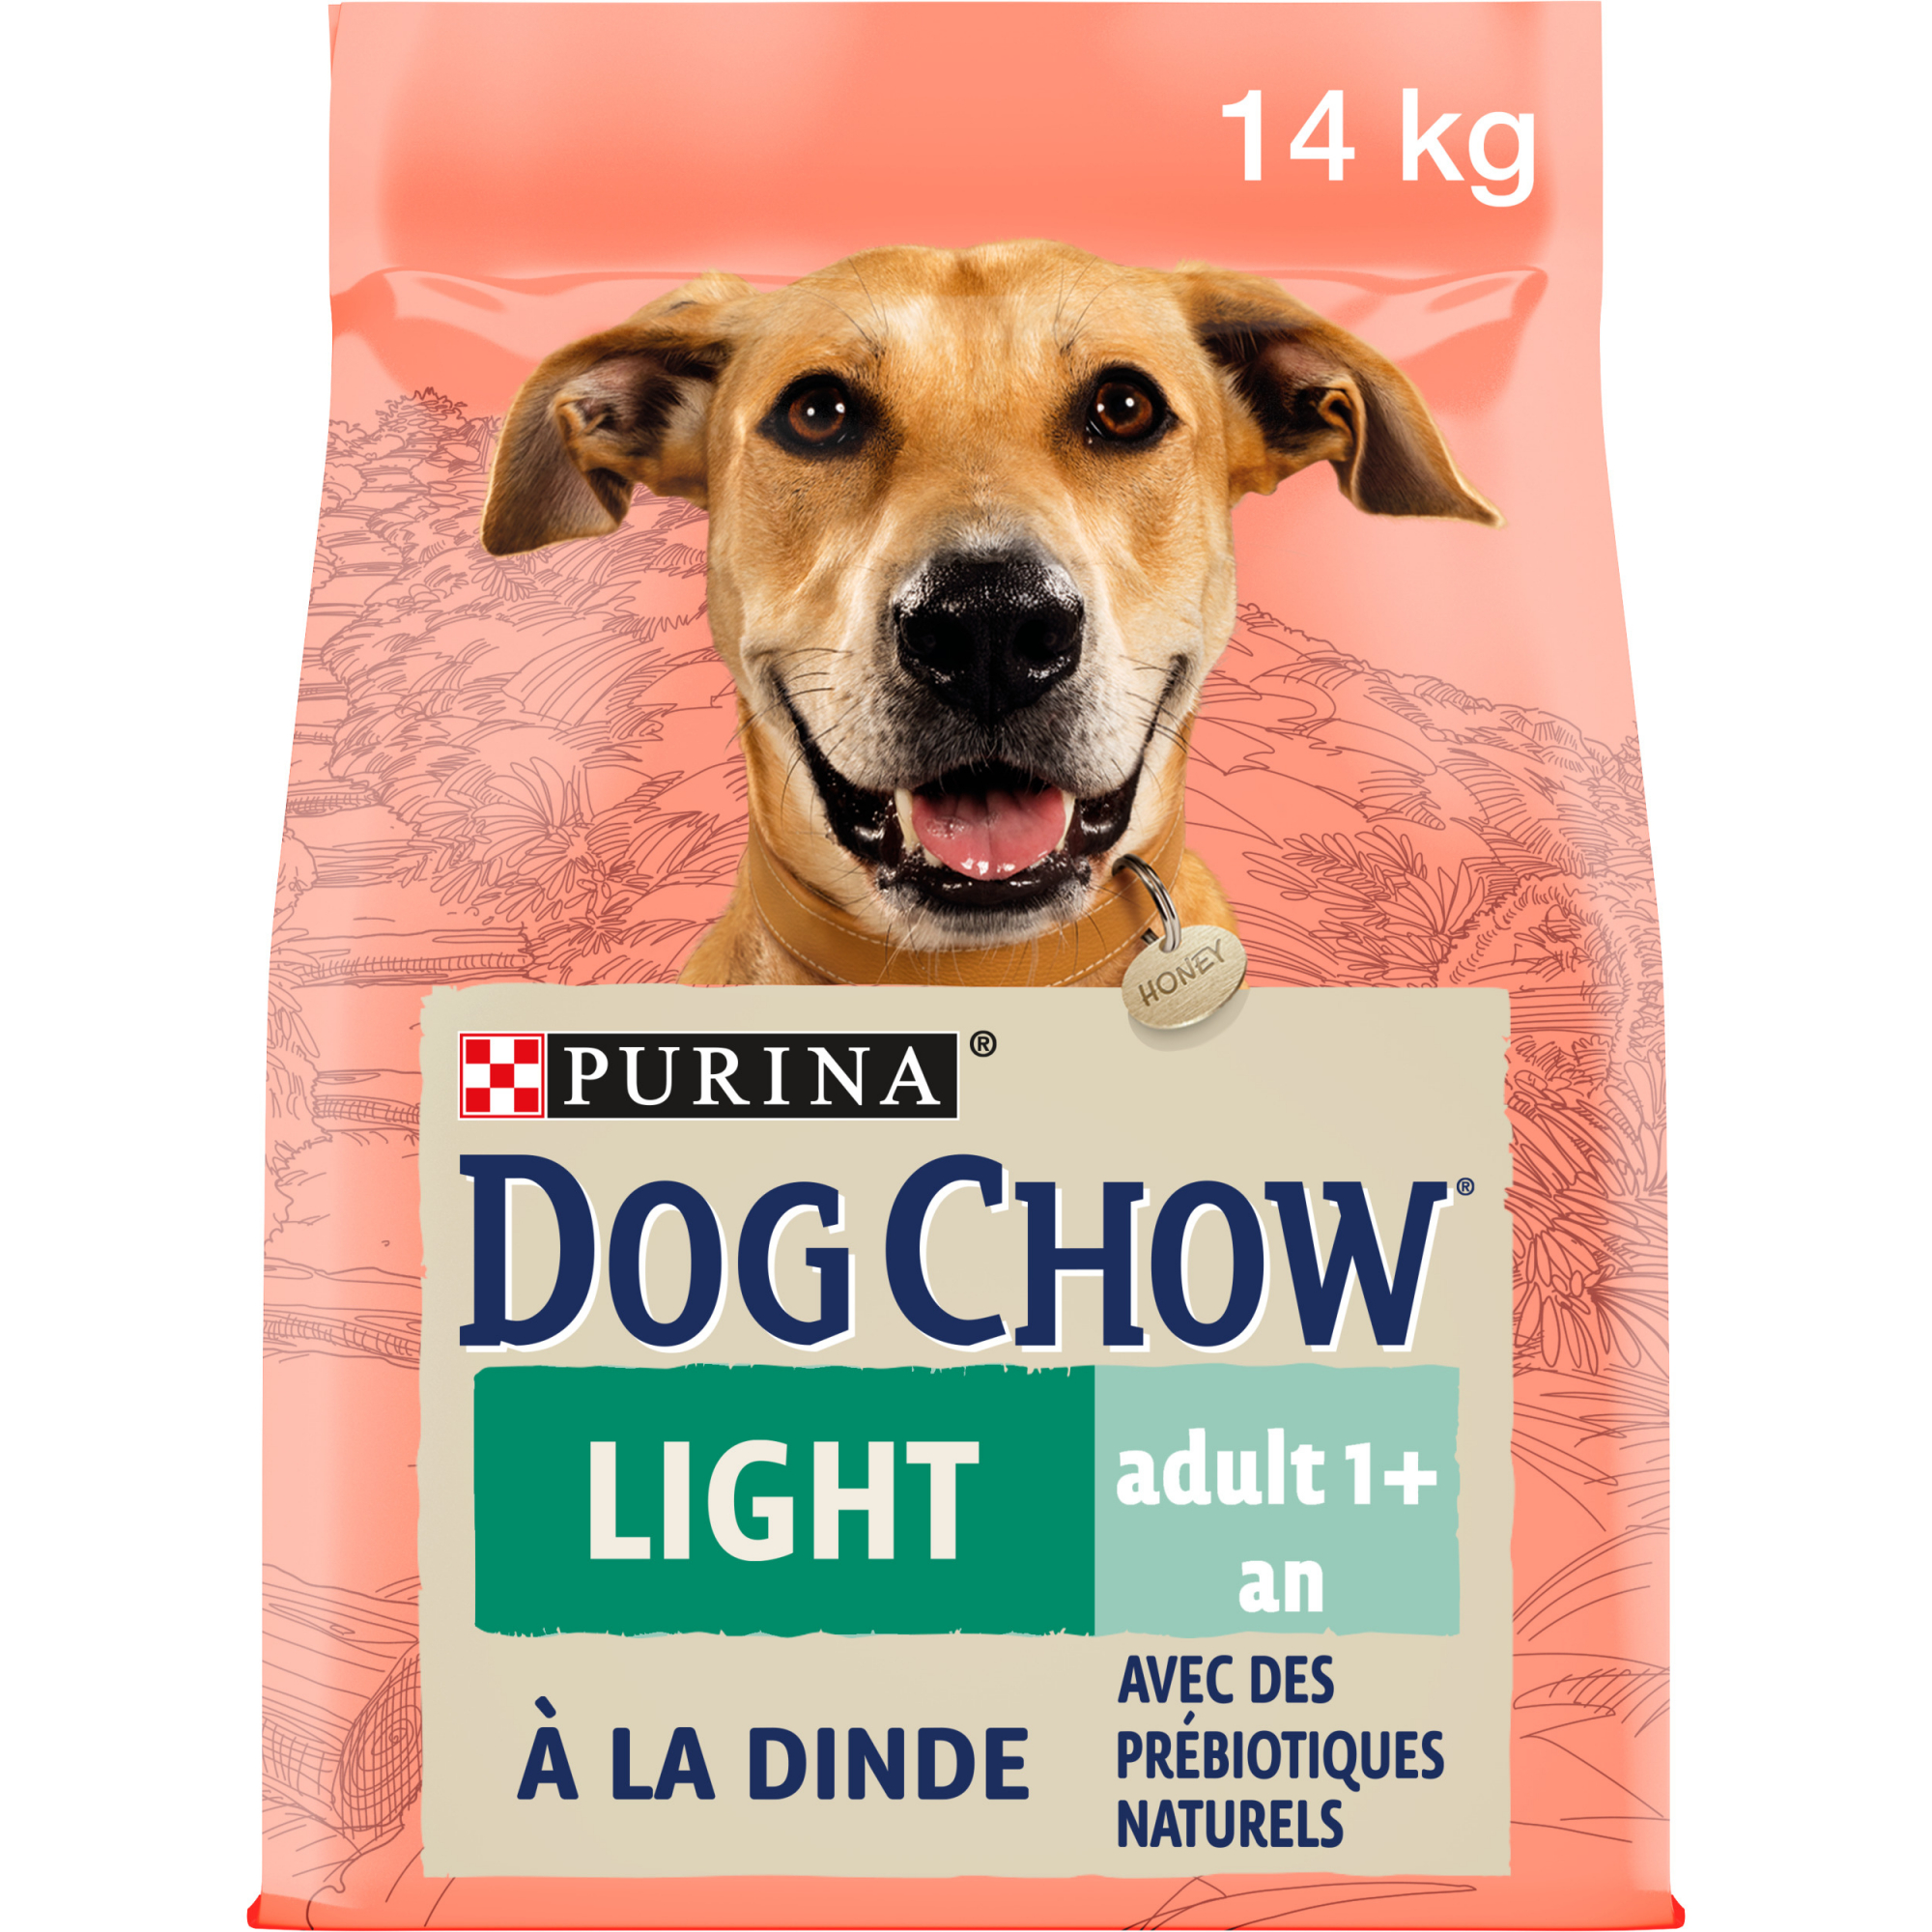 DOG CHOW Light Adult de Pavo pienso para perros